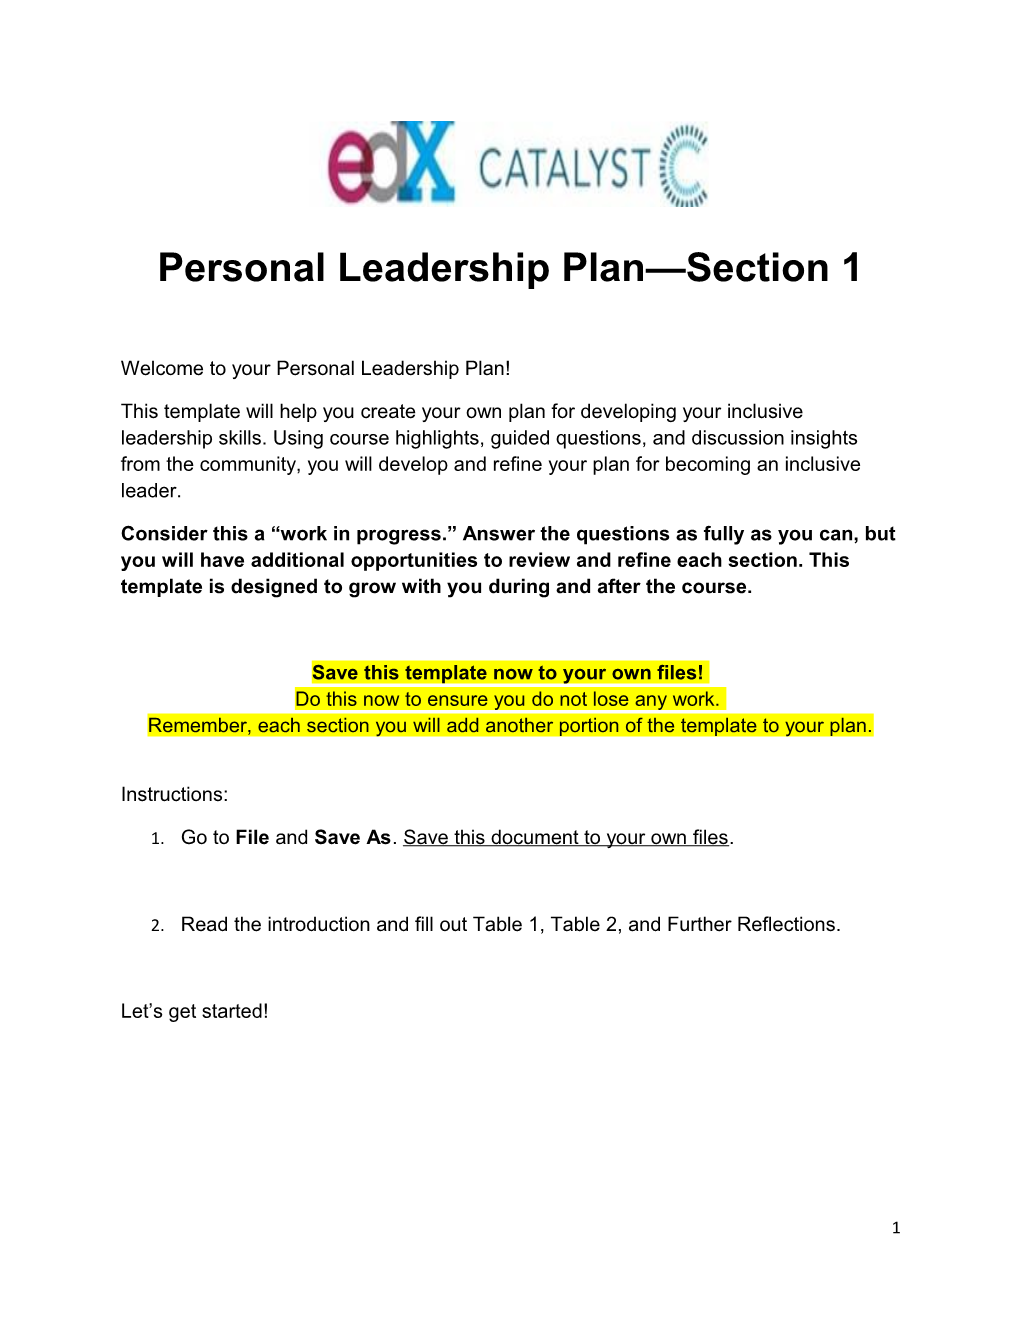 Personal Leadership Plan Template 2-2-15